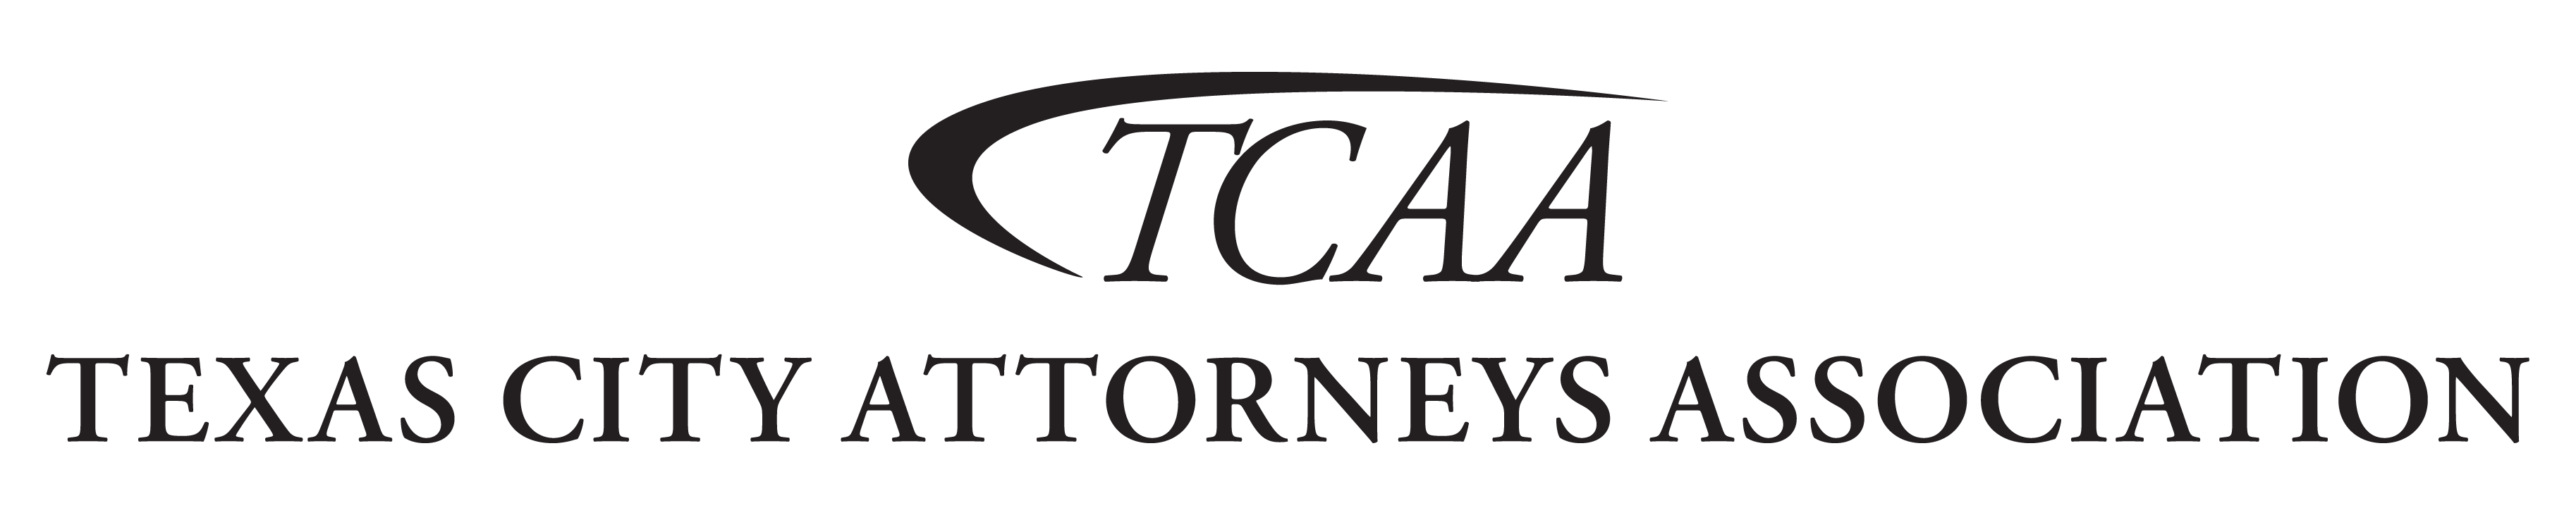 Texas City Attorneys Association